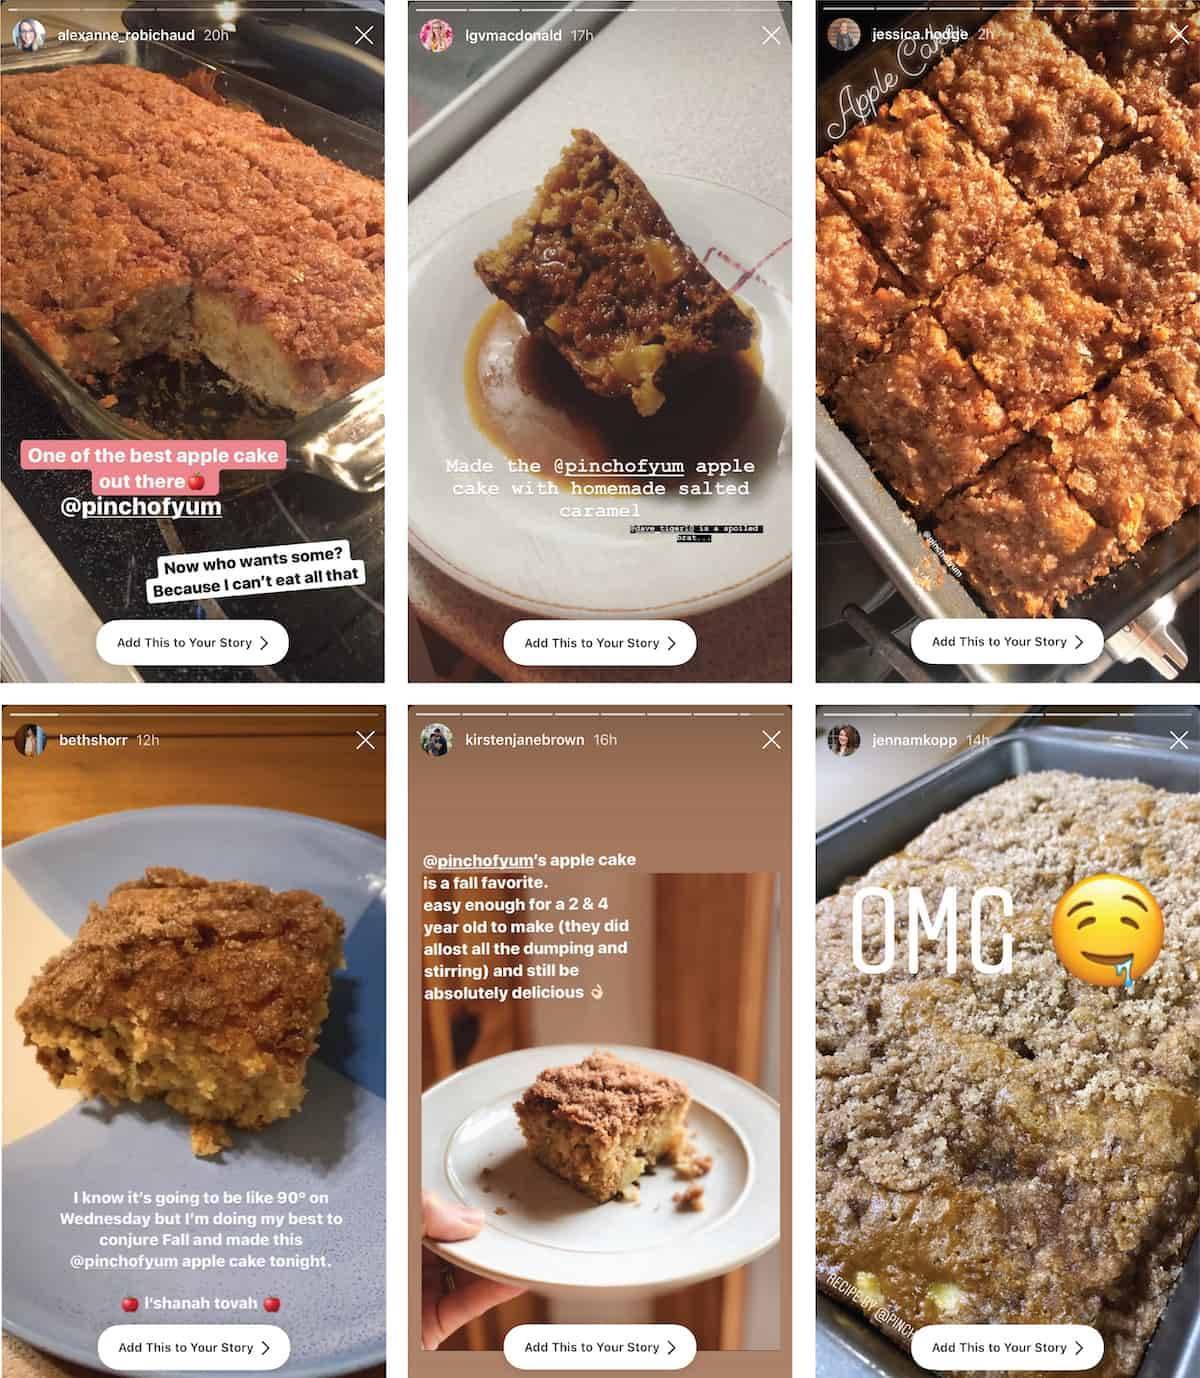 Instagram images of Cinnamon Sugar Apple Cake.